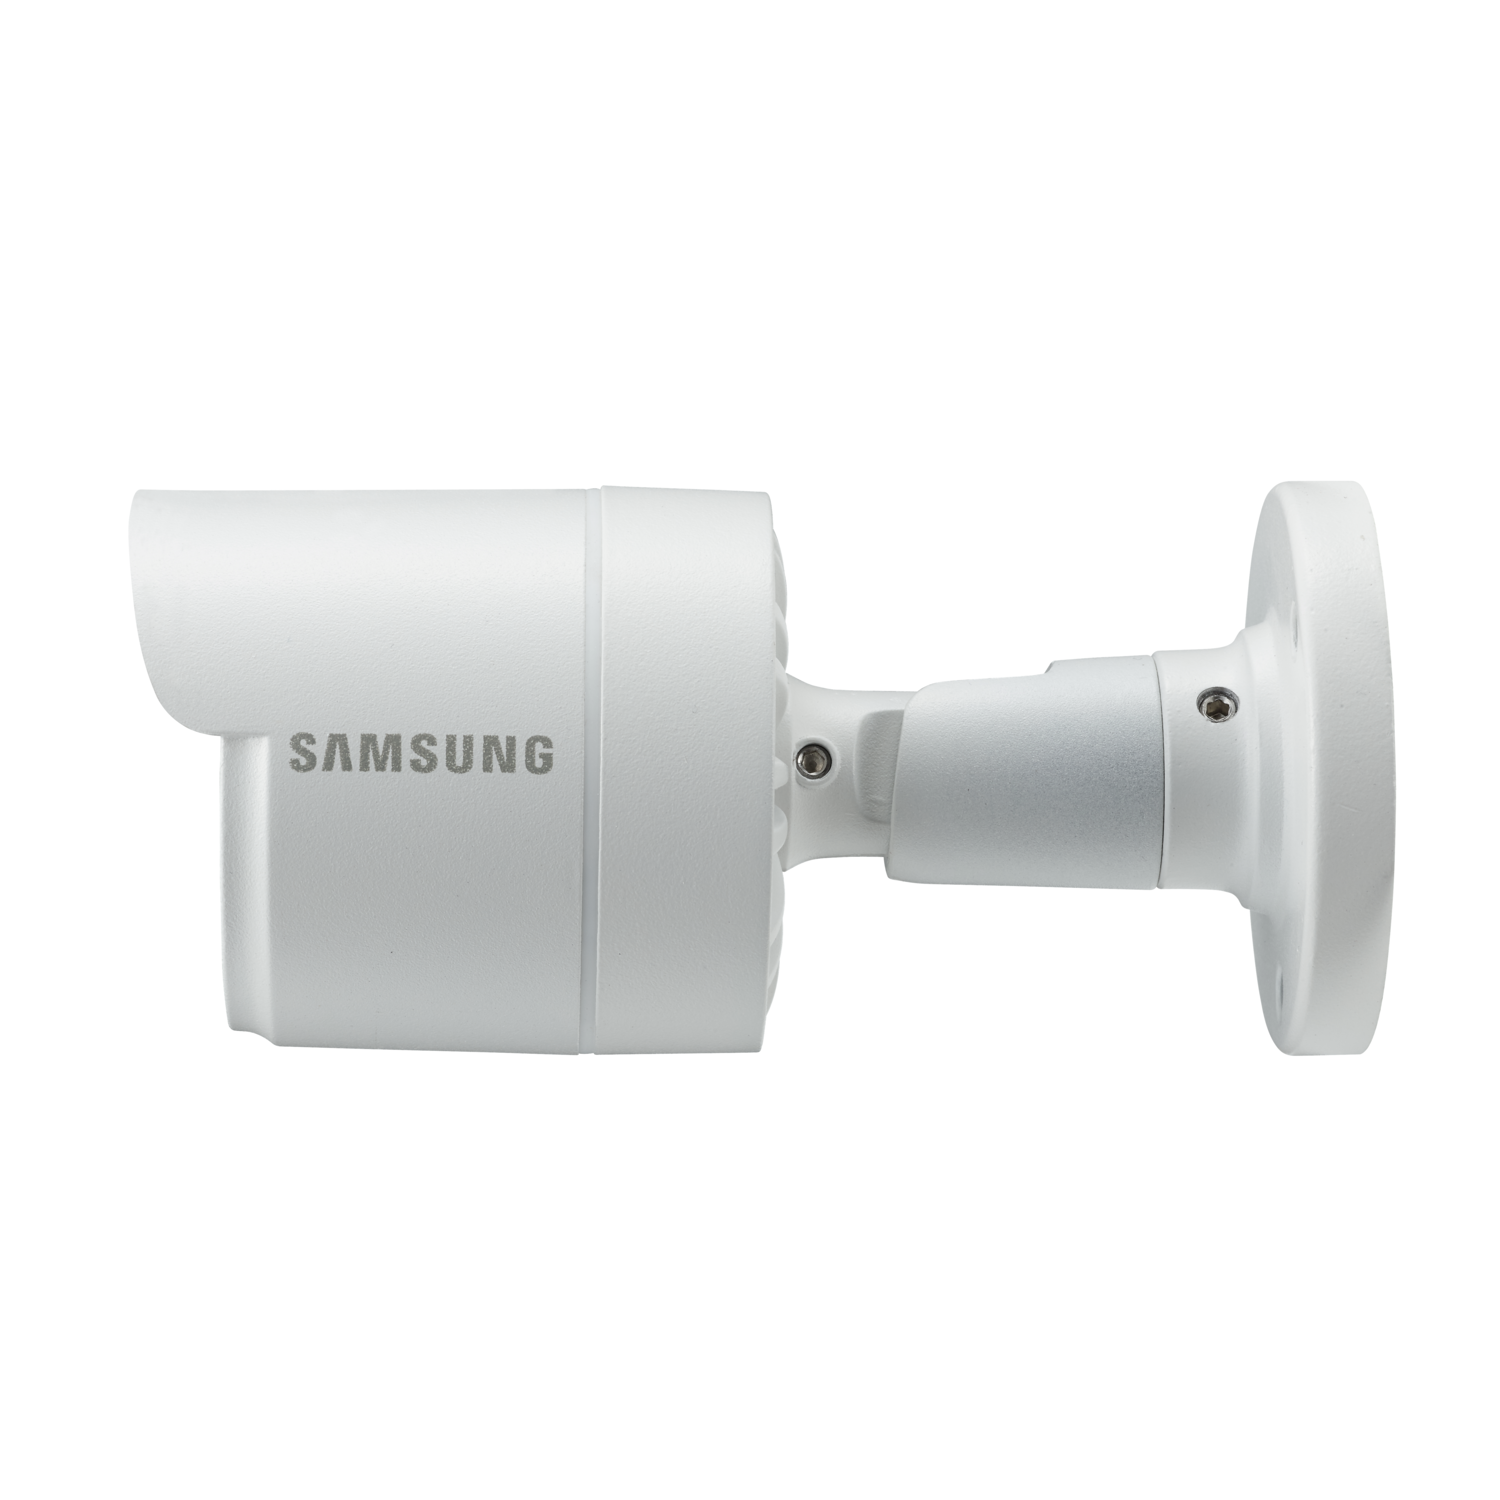 Samsung SDC-9443BC 1080p Full HD Weatherproof IR Camera - Laptops Direct